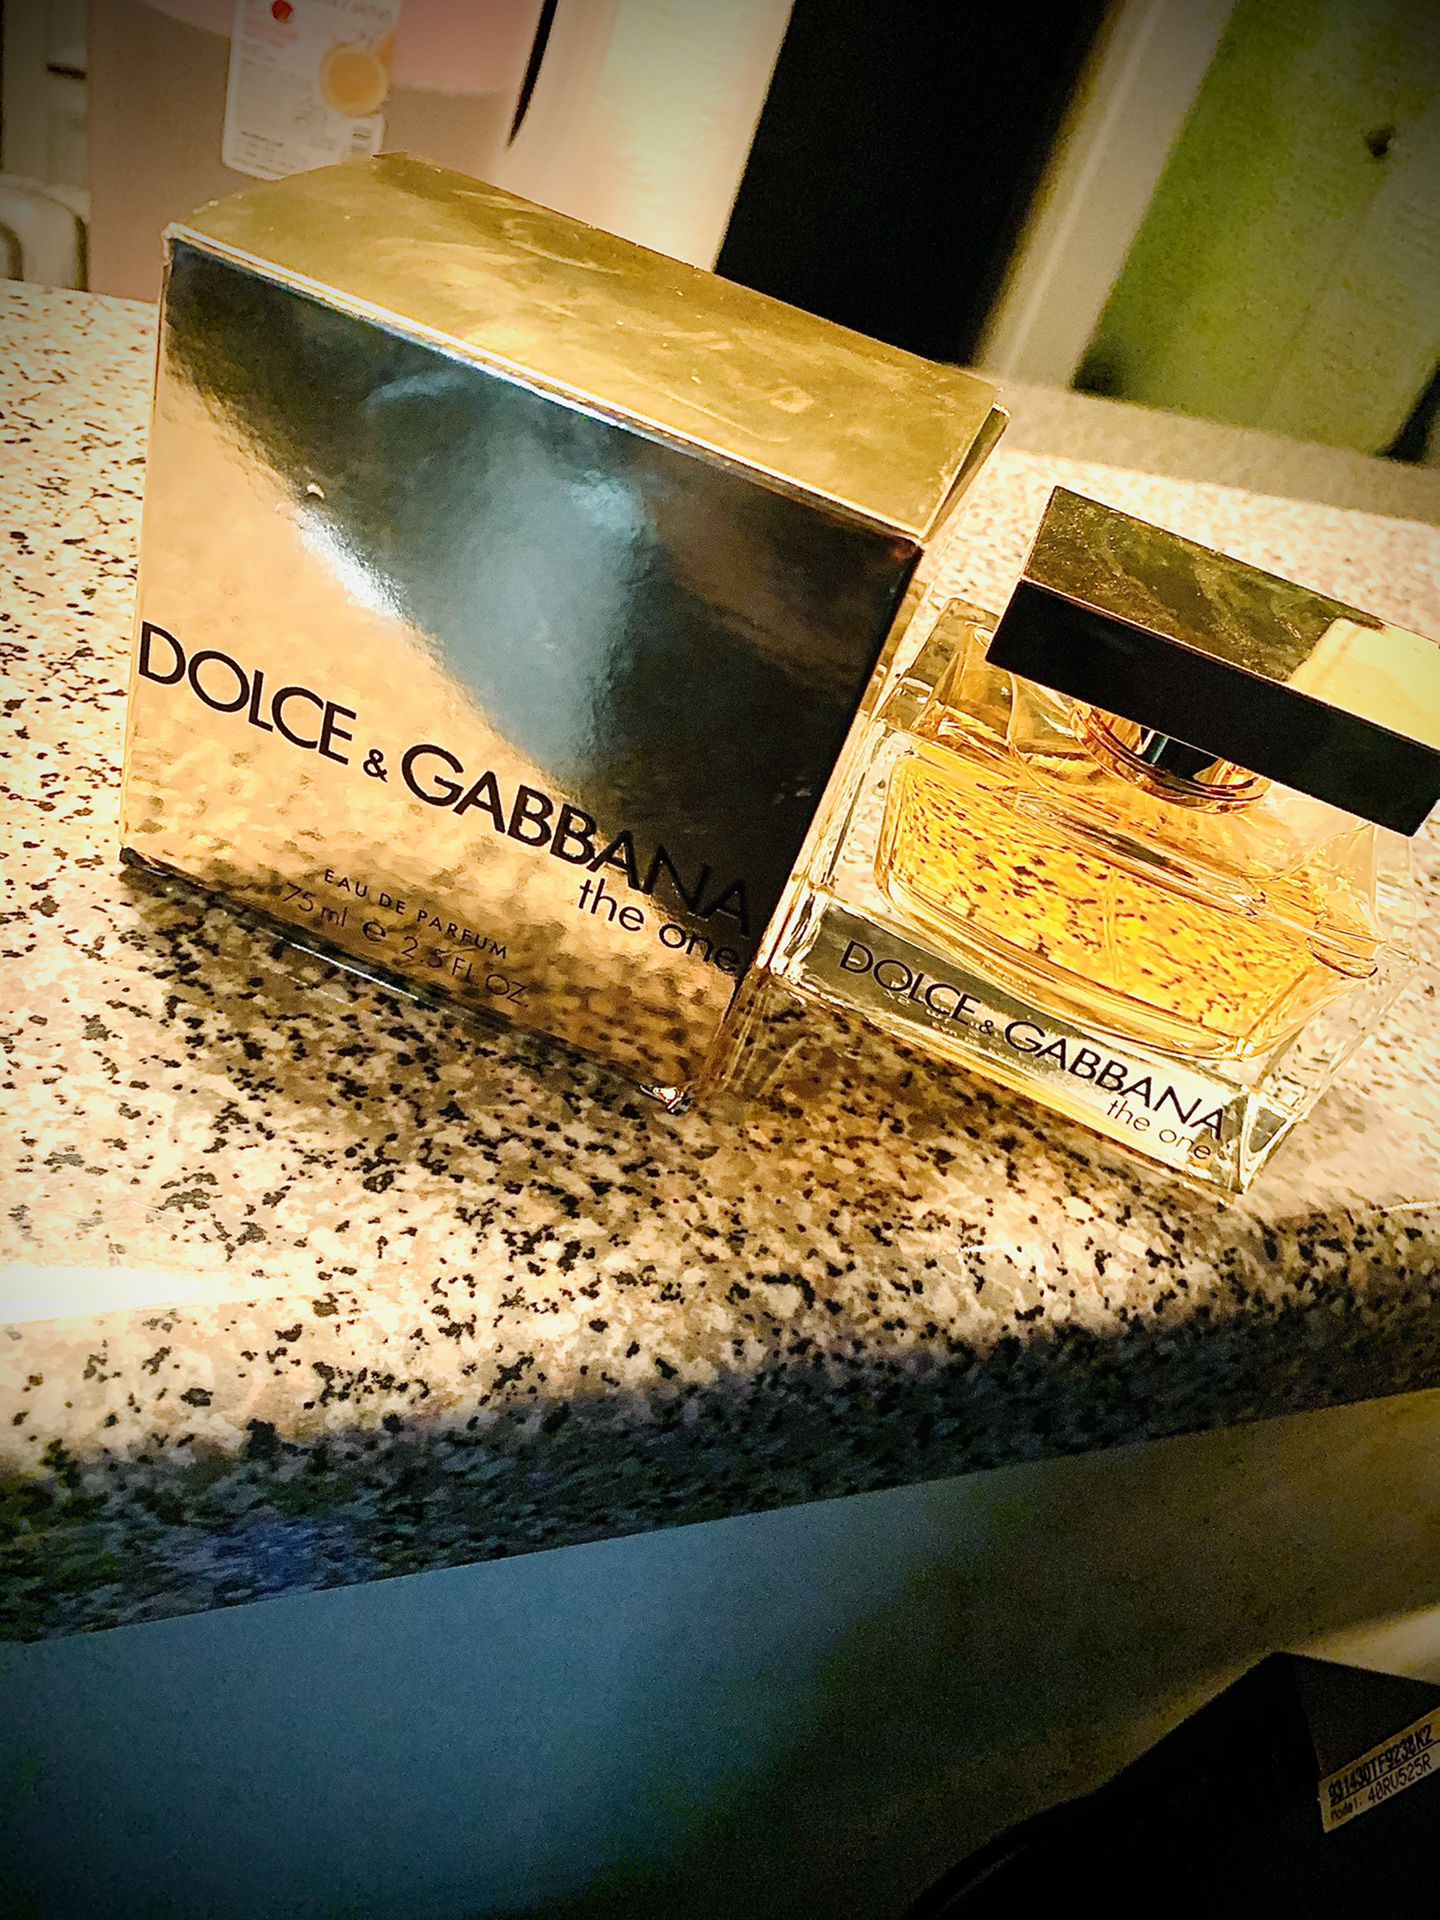 “Dolce & Gabbana: The One” Ladies Perfume